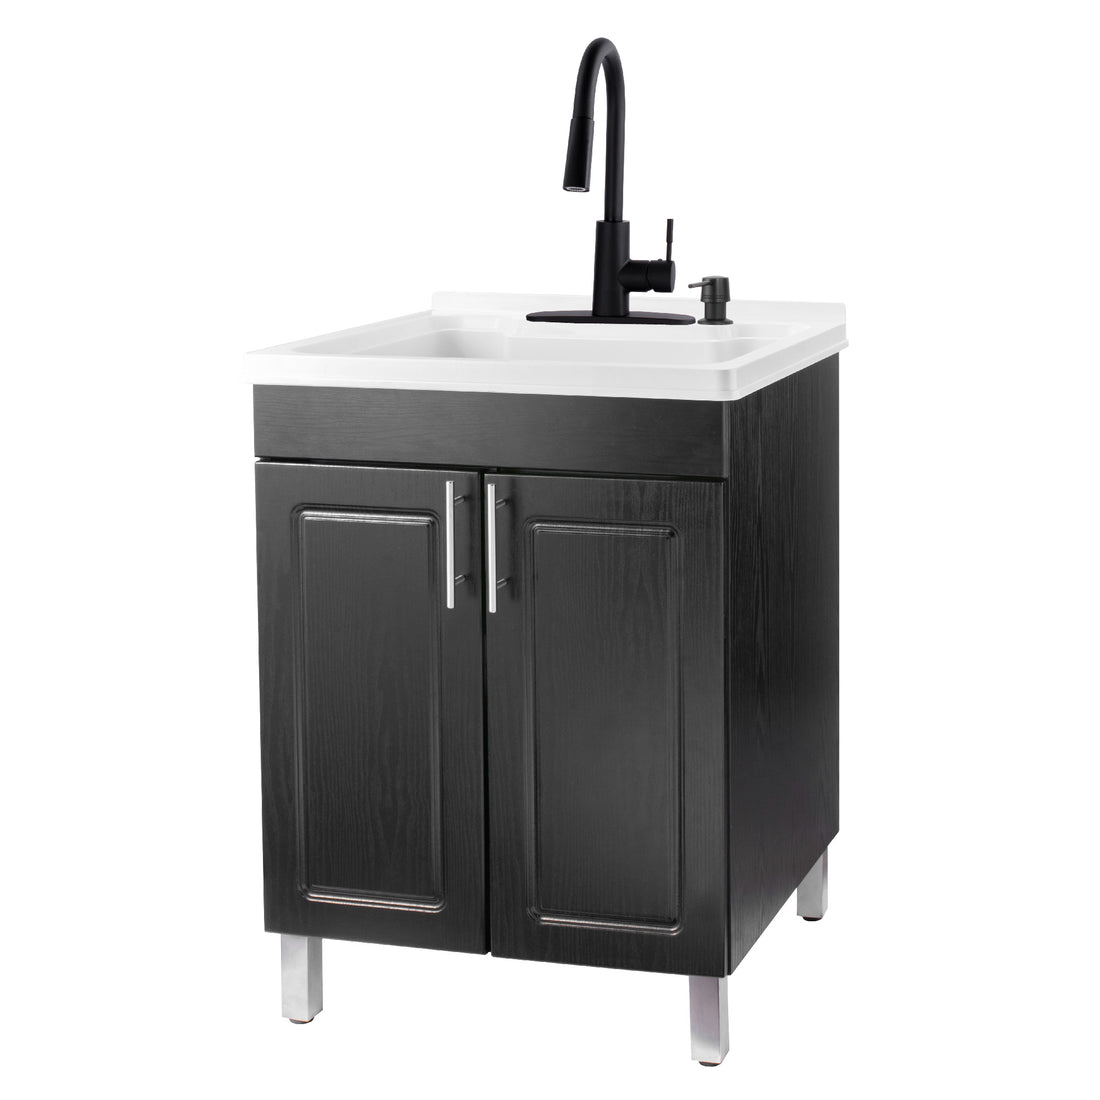 Tehila Black Vanity Cabinet and White Utility Sink with Black Finish High-Arc Pull-Down Faucet - Utility sinks vanites Tehila